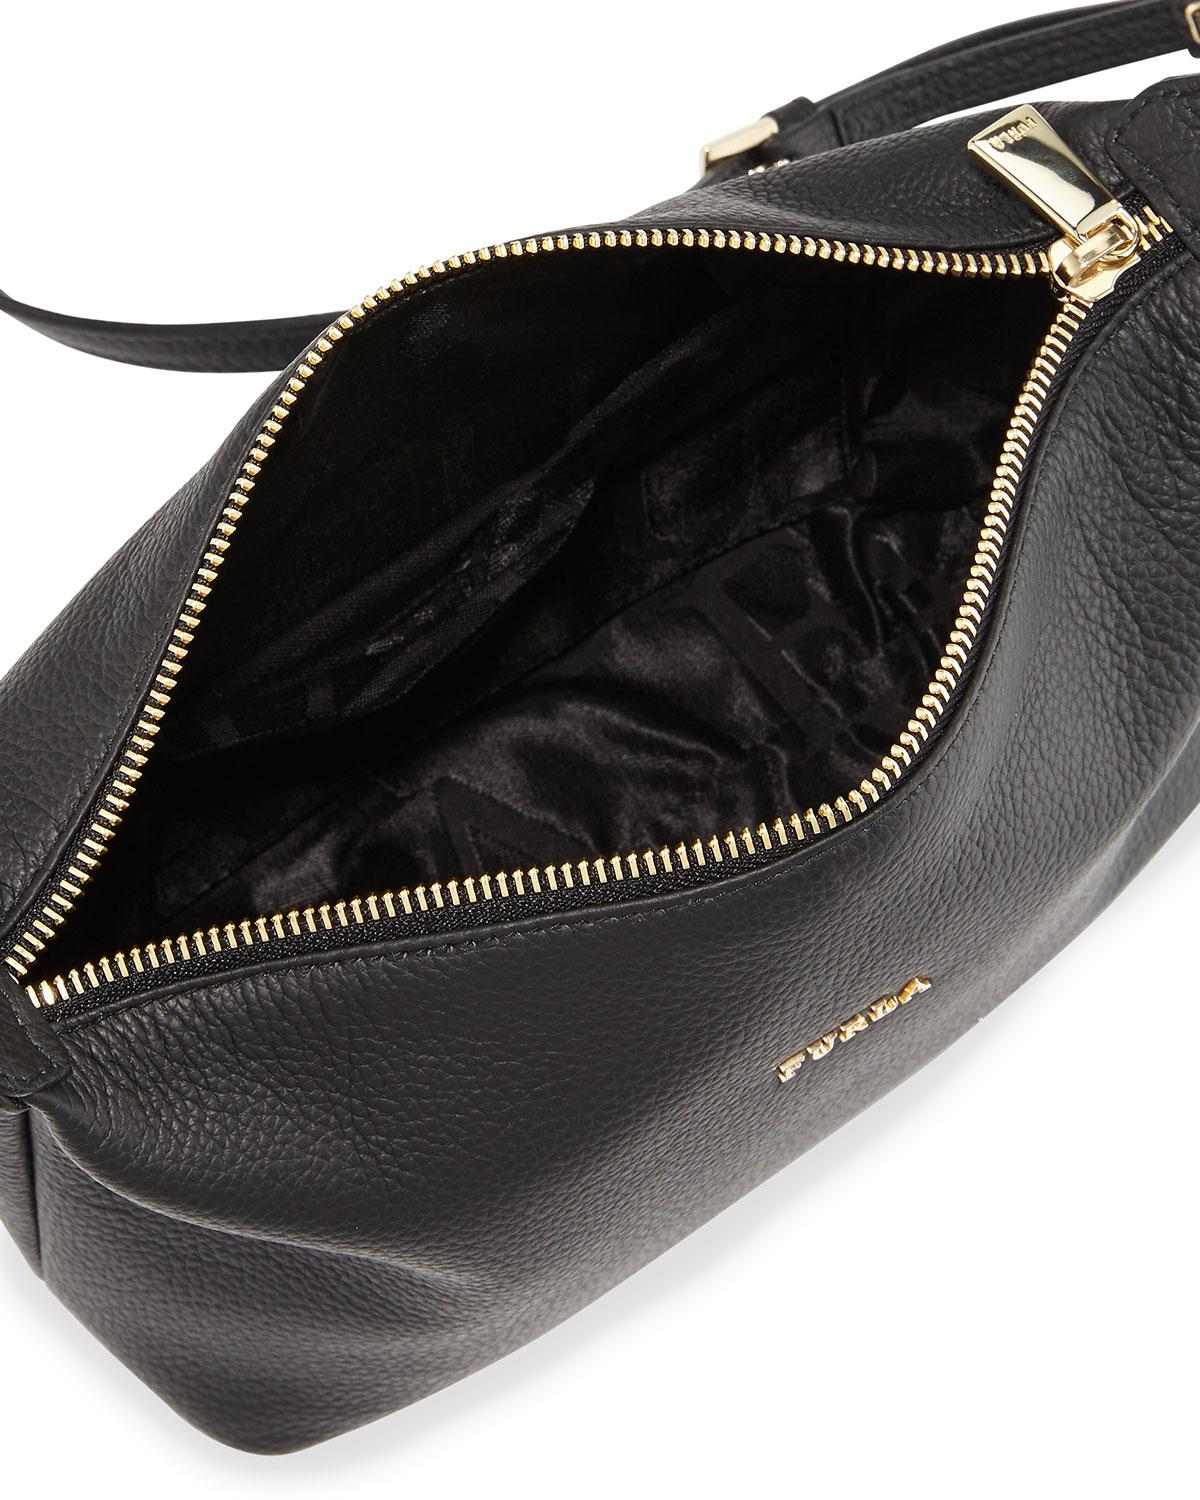 Lyst - Furla Sophie Leather Crossbody Bag in Black